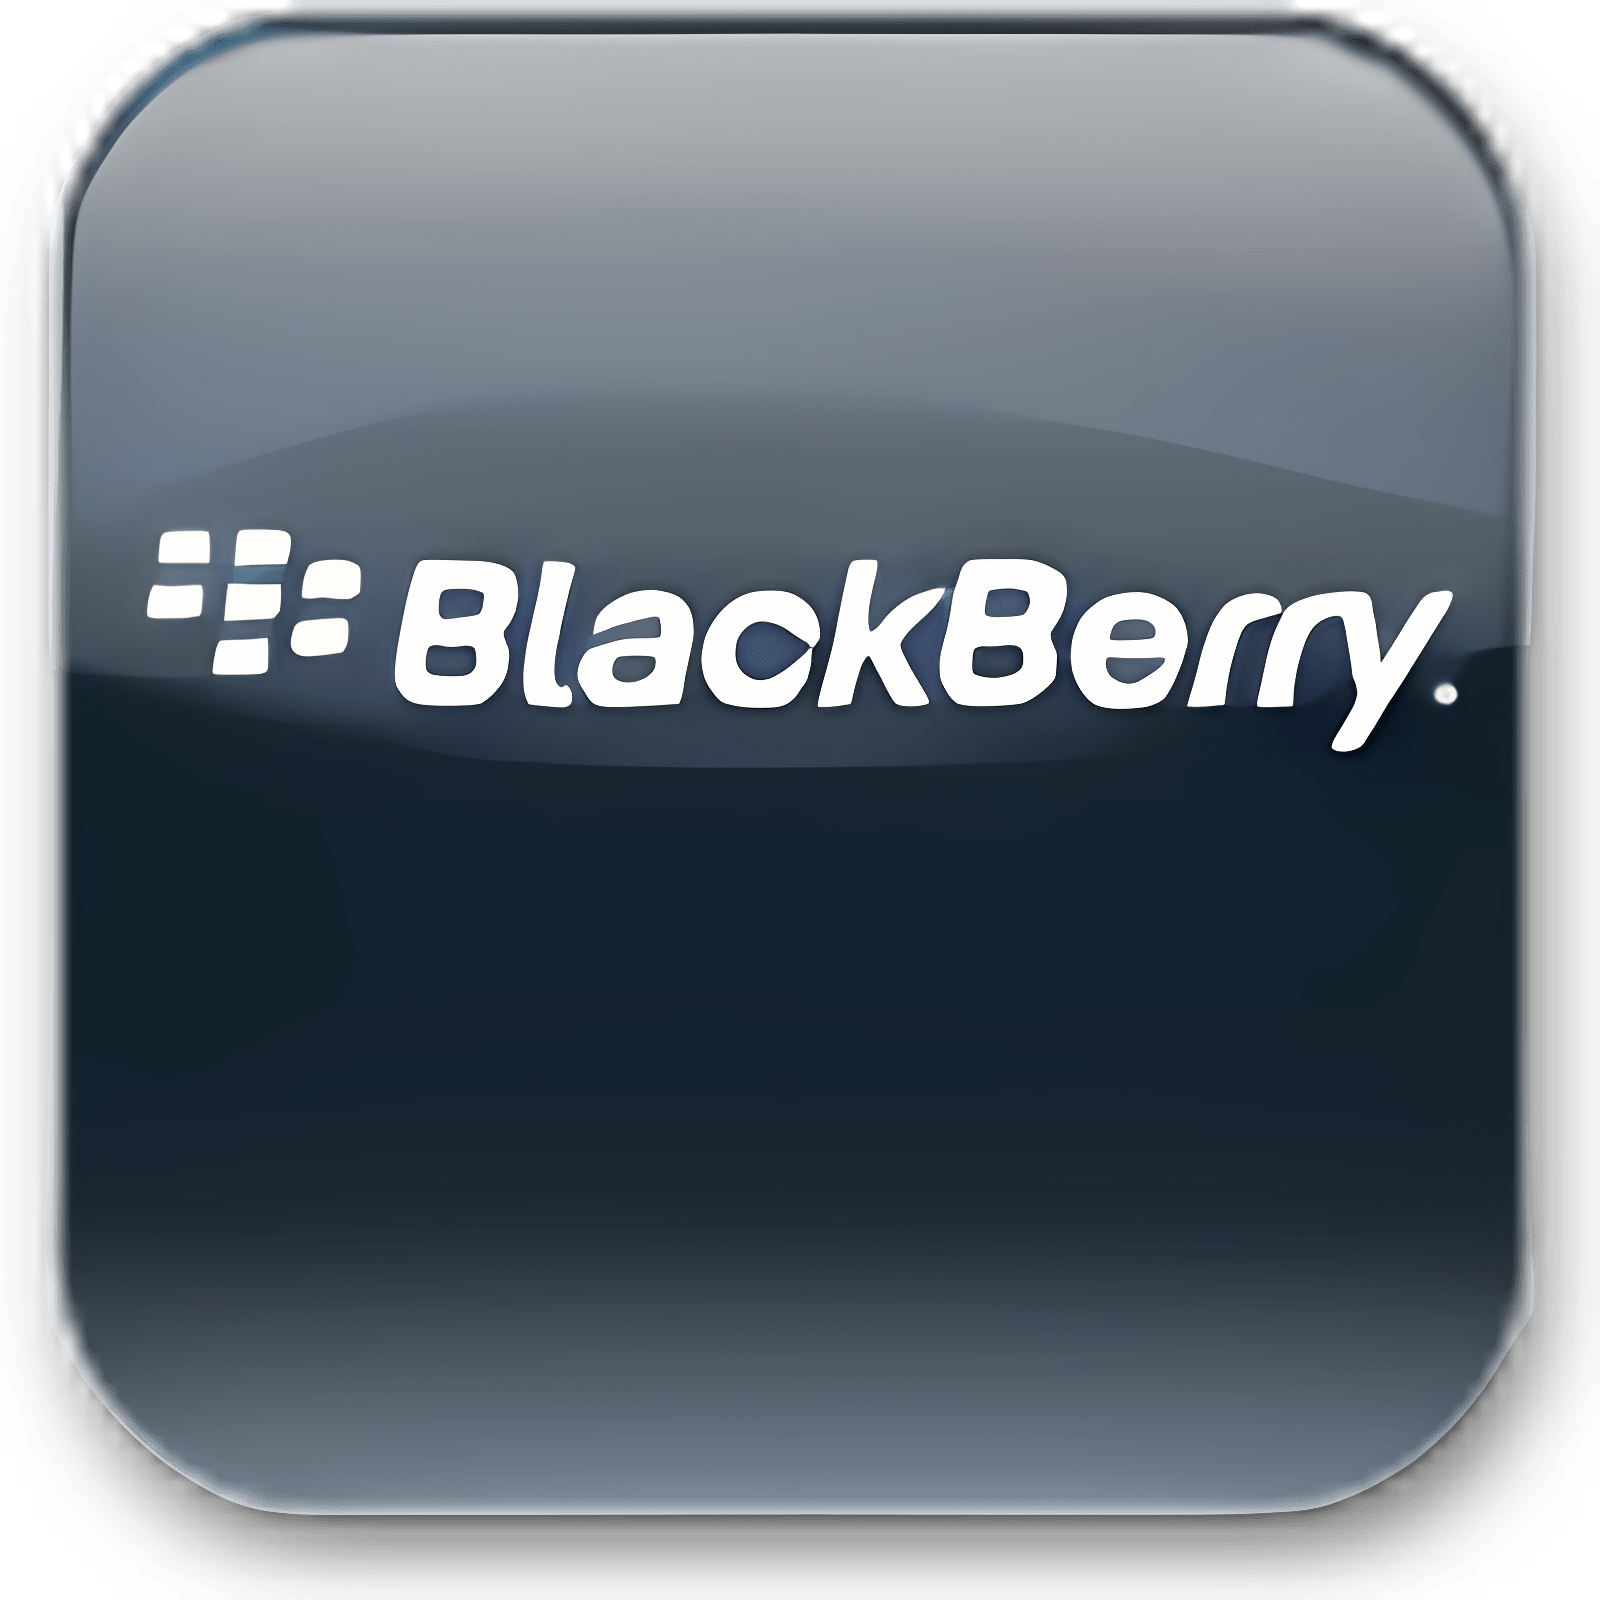 blackberry desktop manager for pc free download